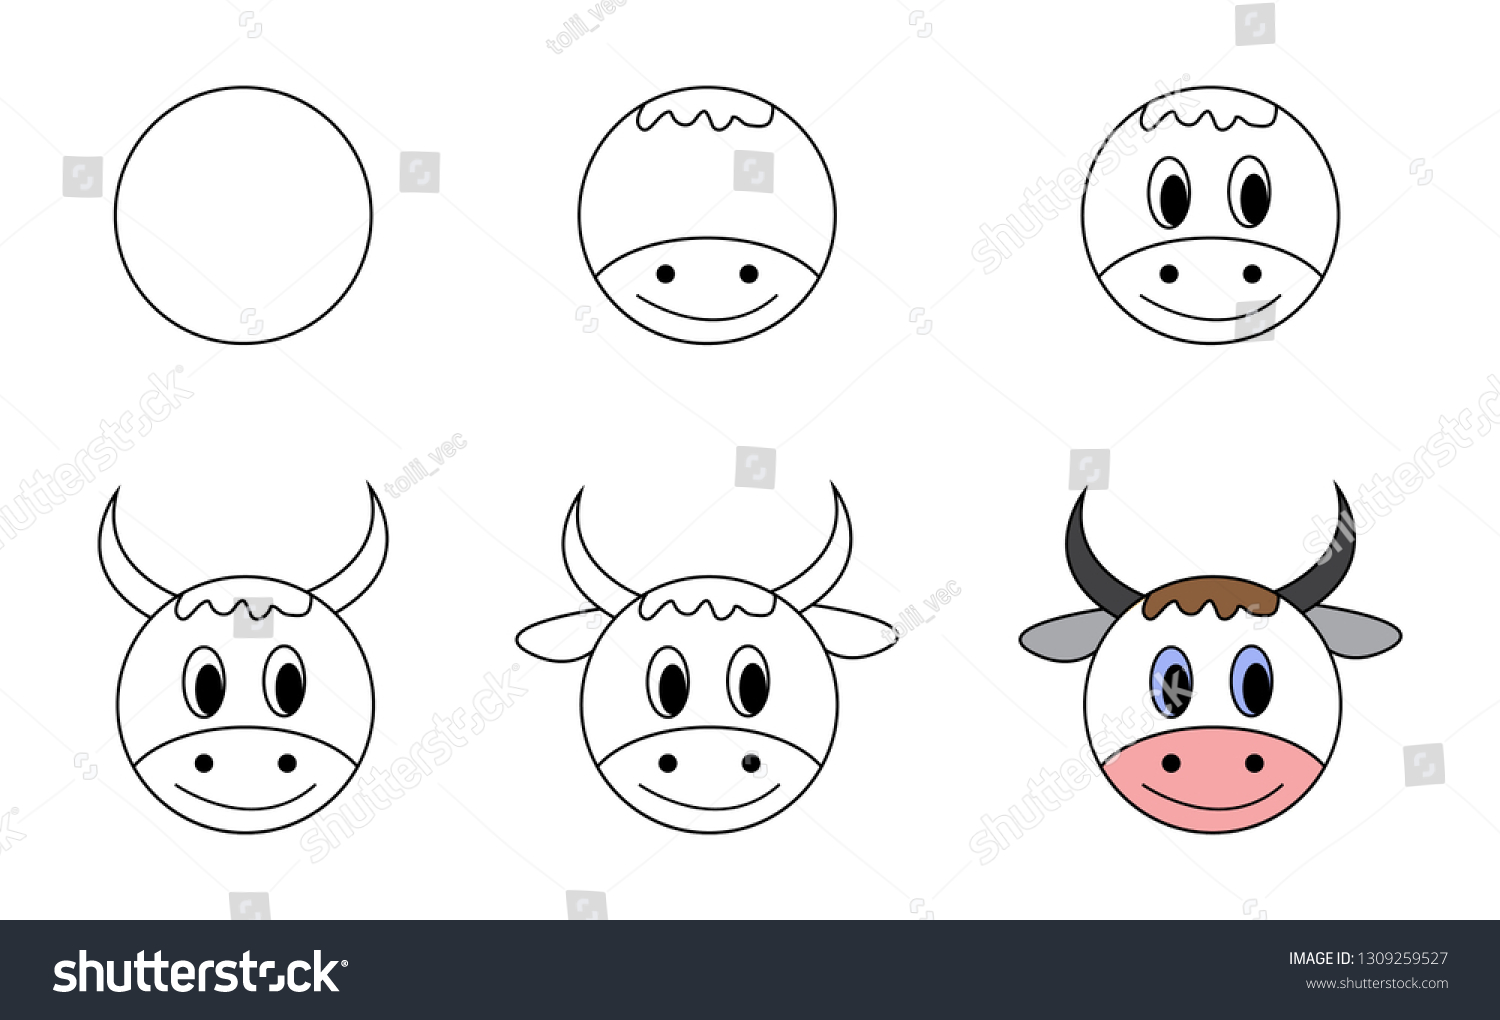 Cow Drawing Easy - Carinewbi